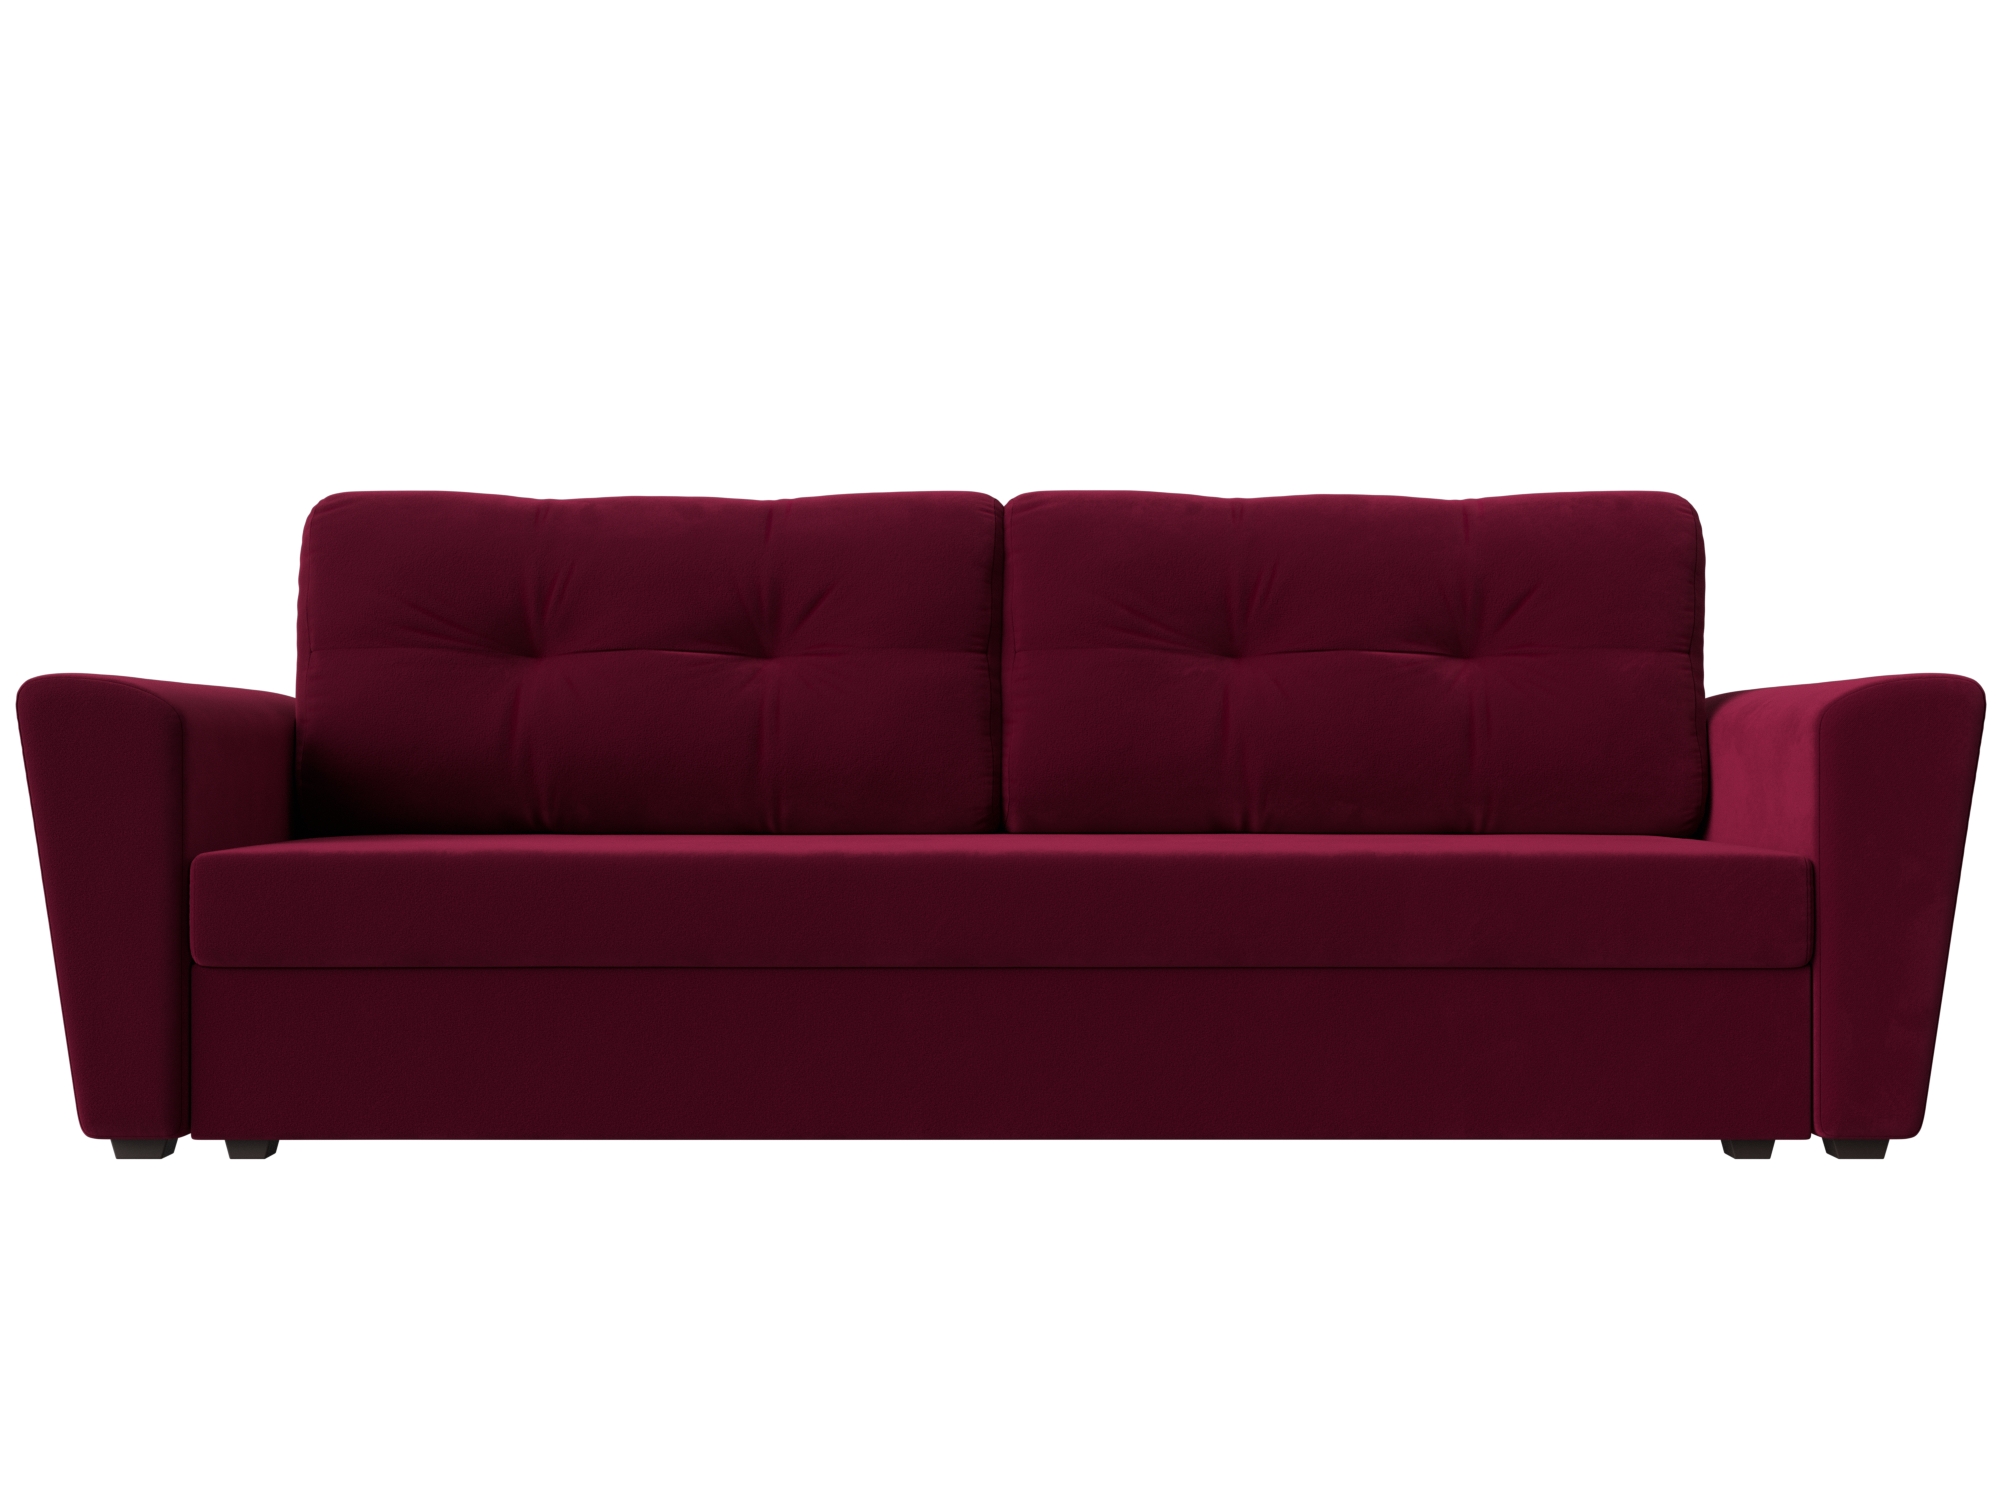 Диван Амстердам MebelVia Красный, Микровельвет, ЛДСП диван еврокнижка мебелико европа микровельвет красный